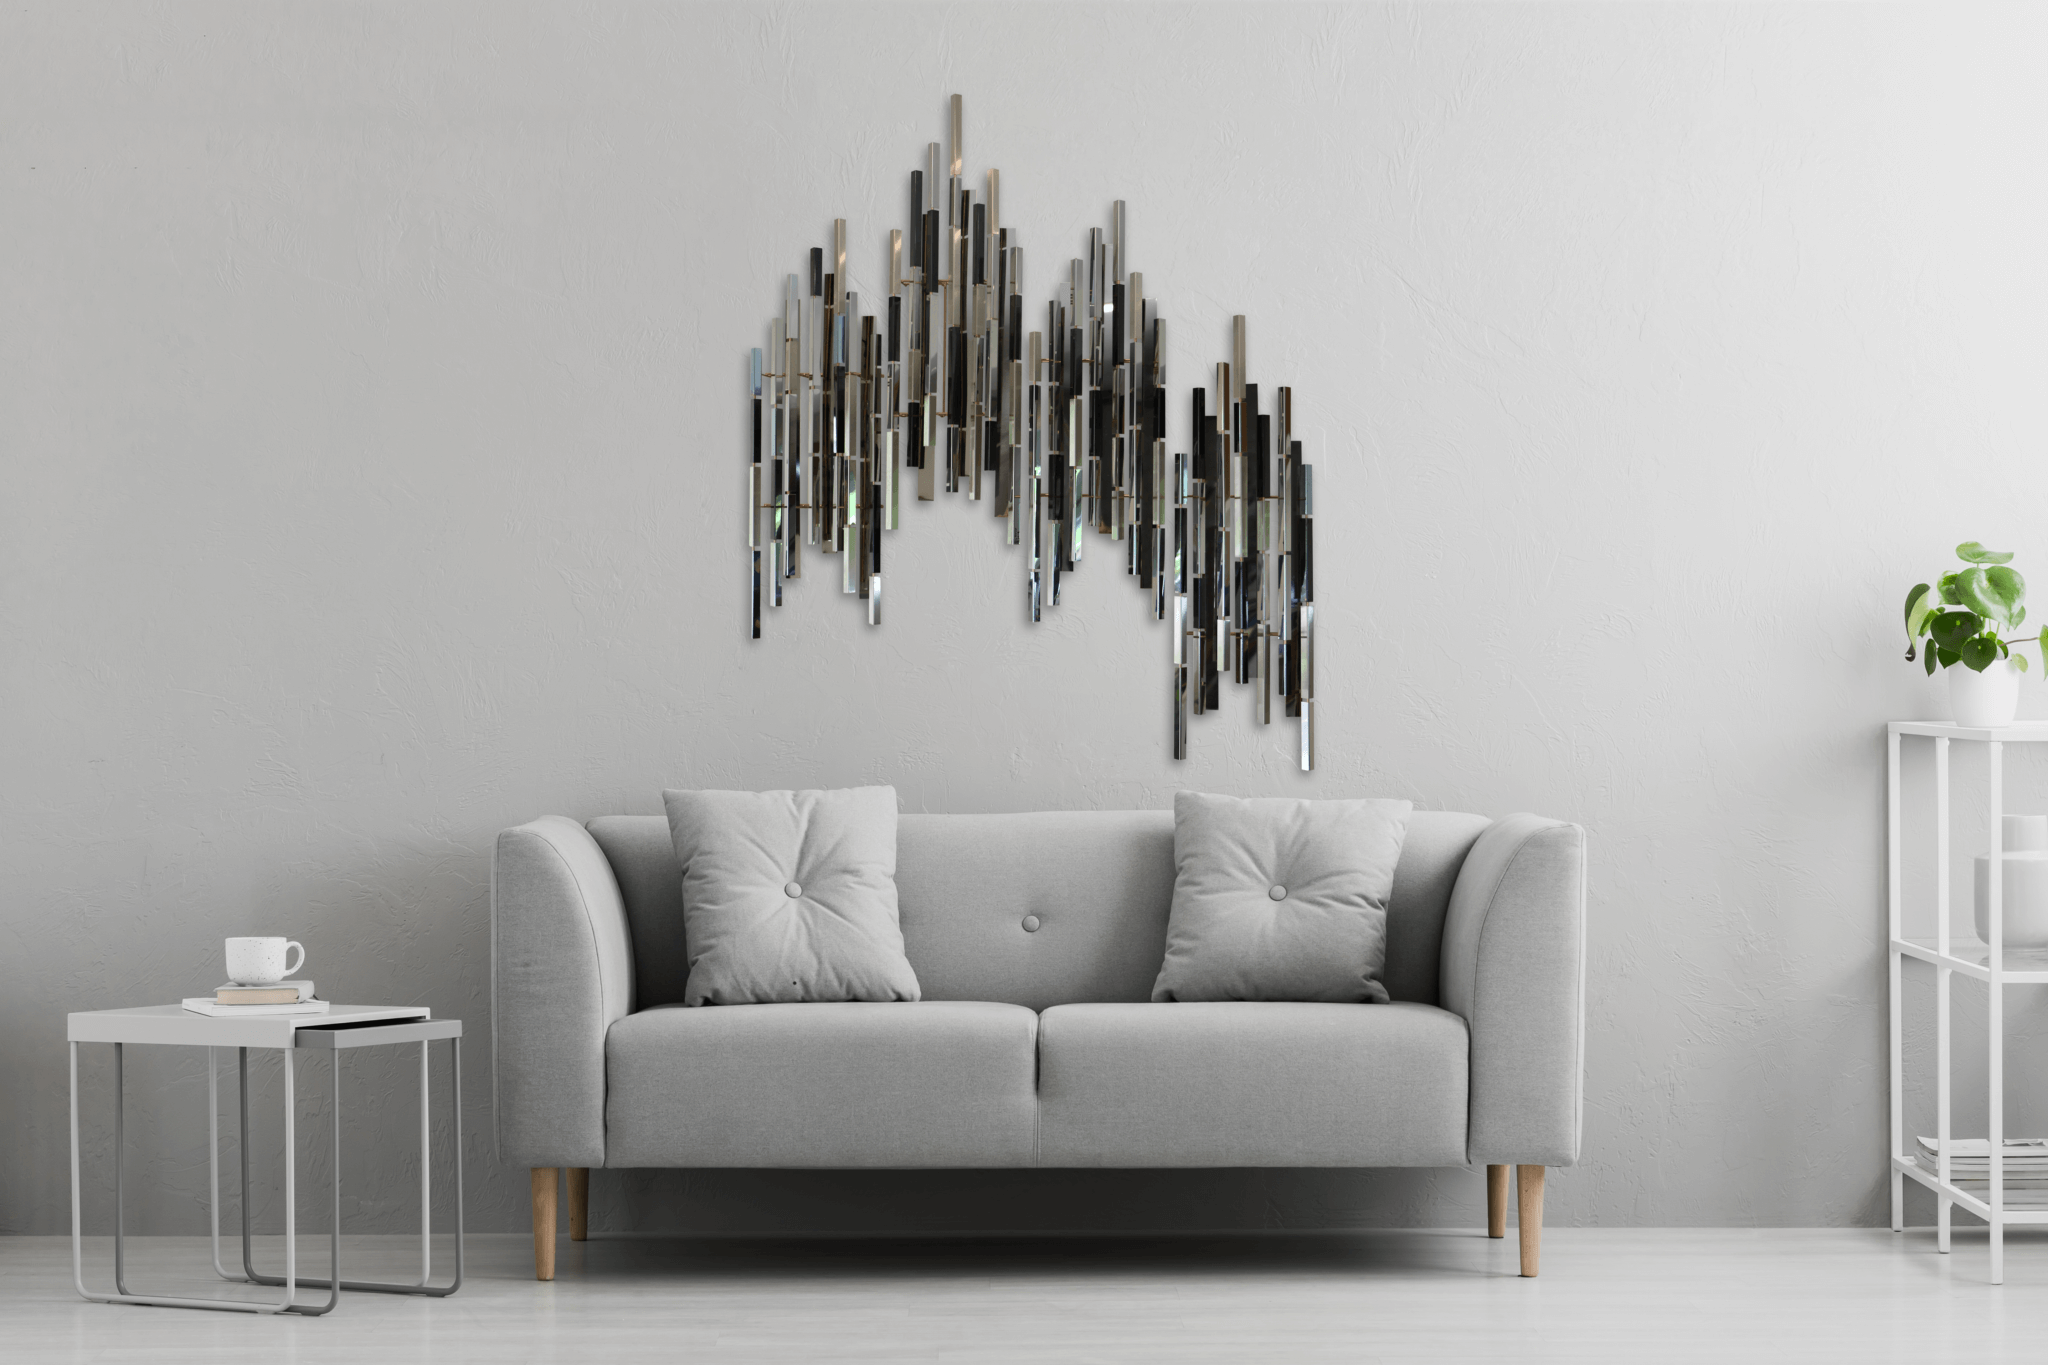 4 for Metal Part for Metal - Decor Kaleidoscope Wall & - Sculpture Home Art Office -